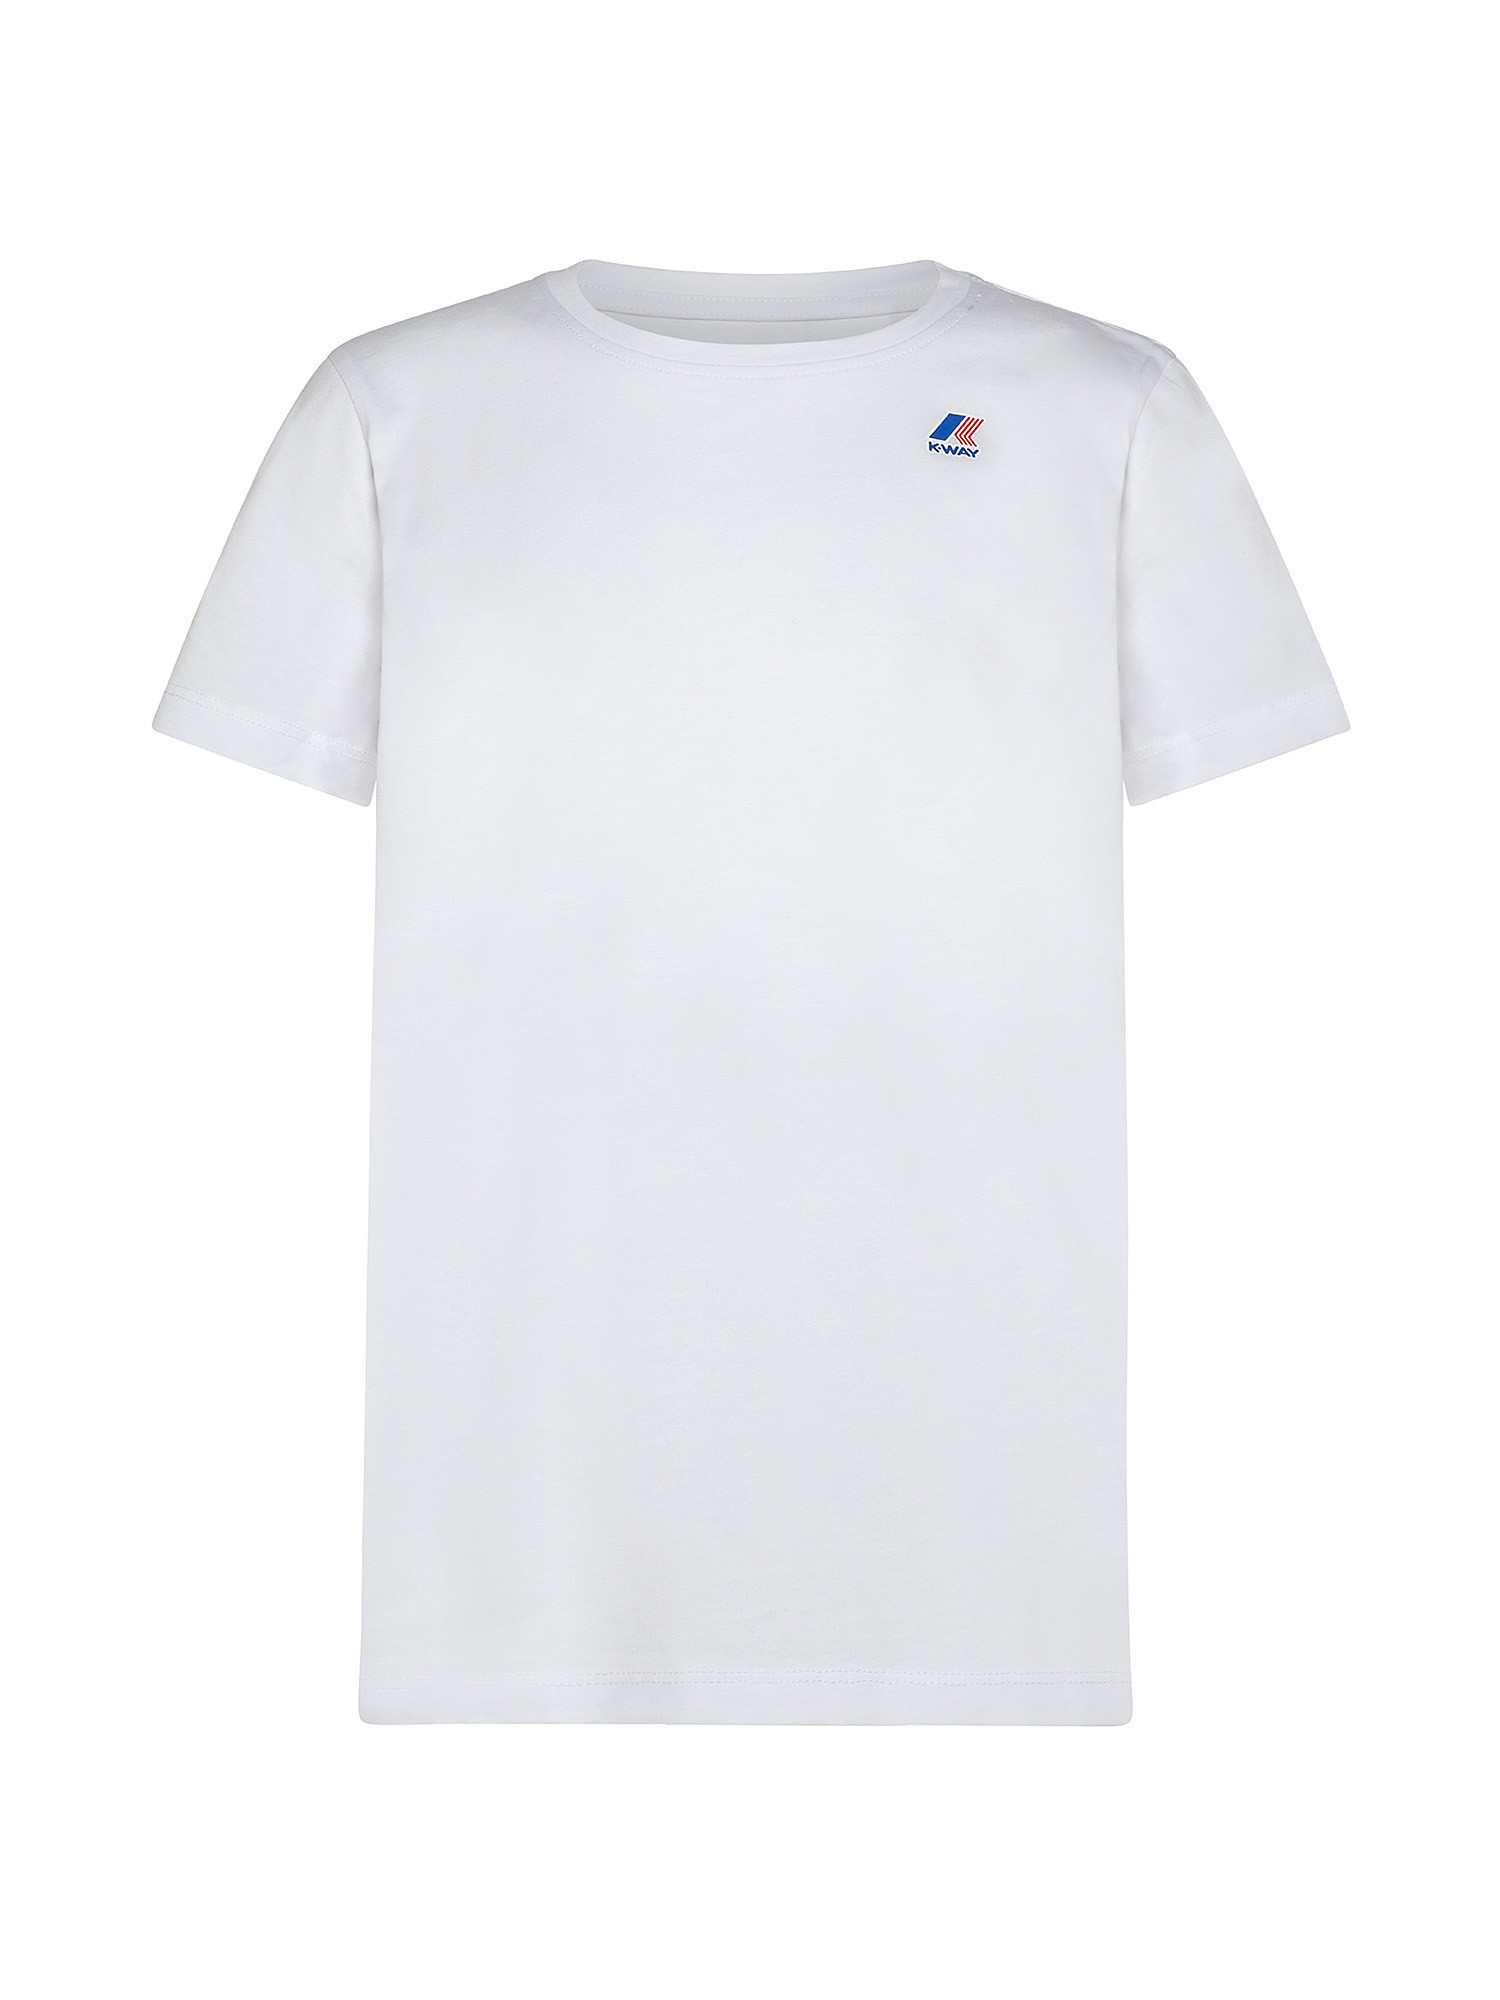 Regular fit boy t-shirt, White, large image number 0